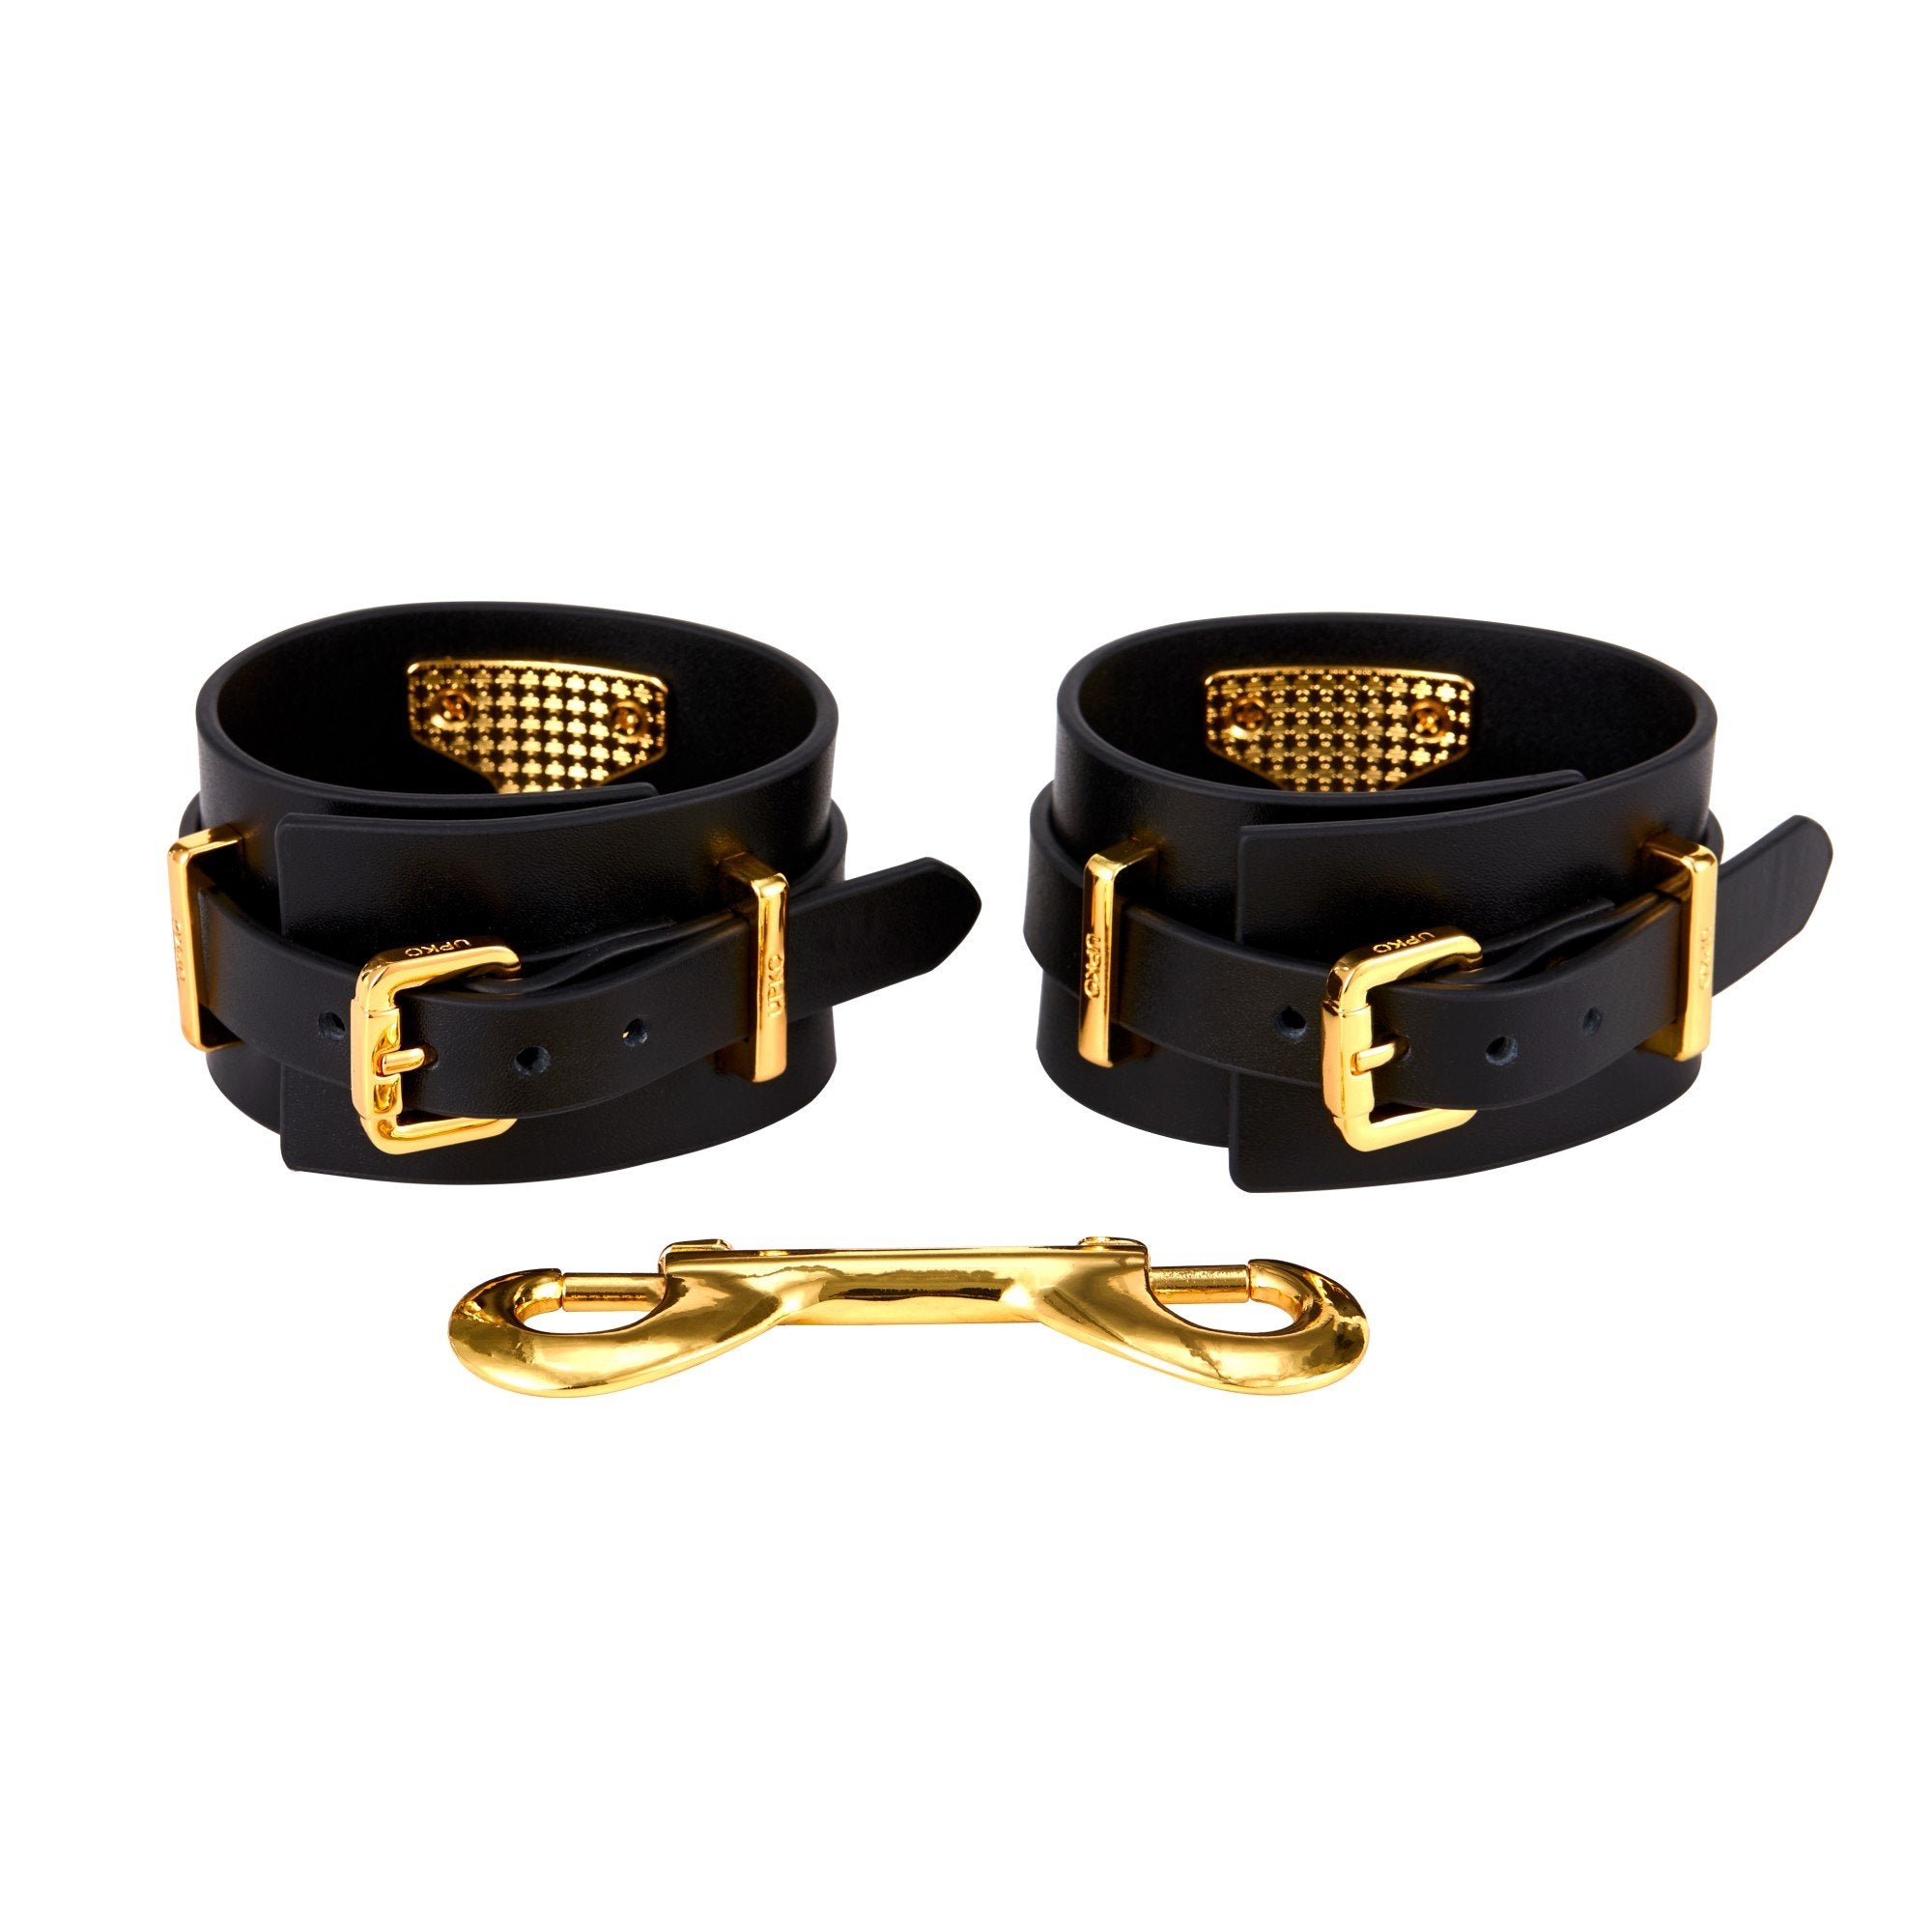 Luxury Italian Leather Ankle Cuffs by UPKO